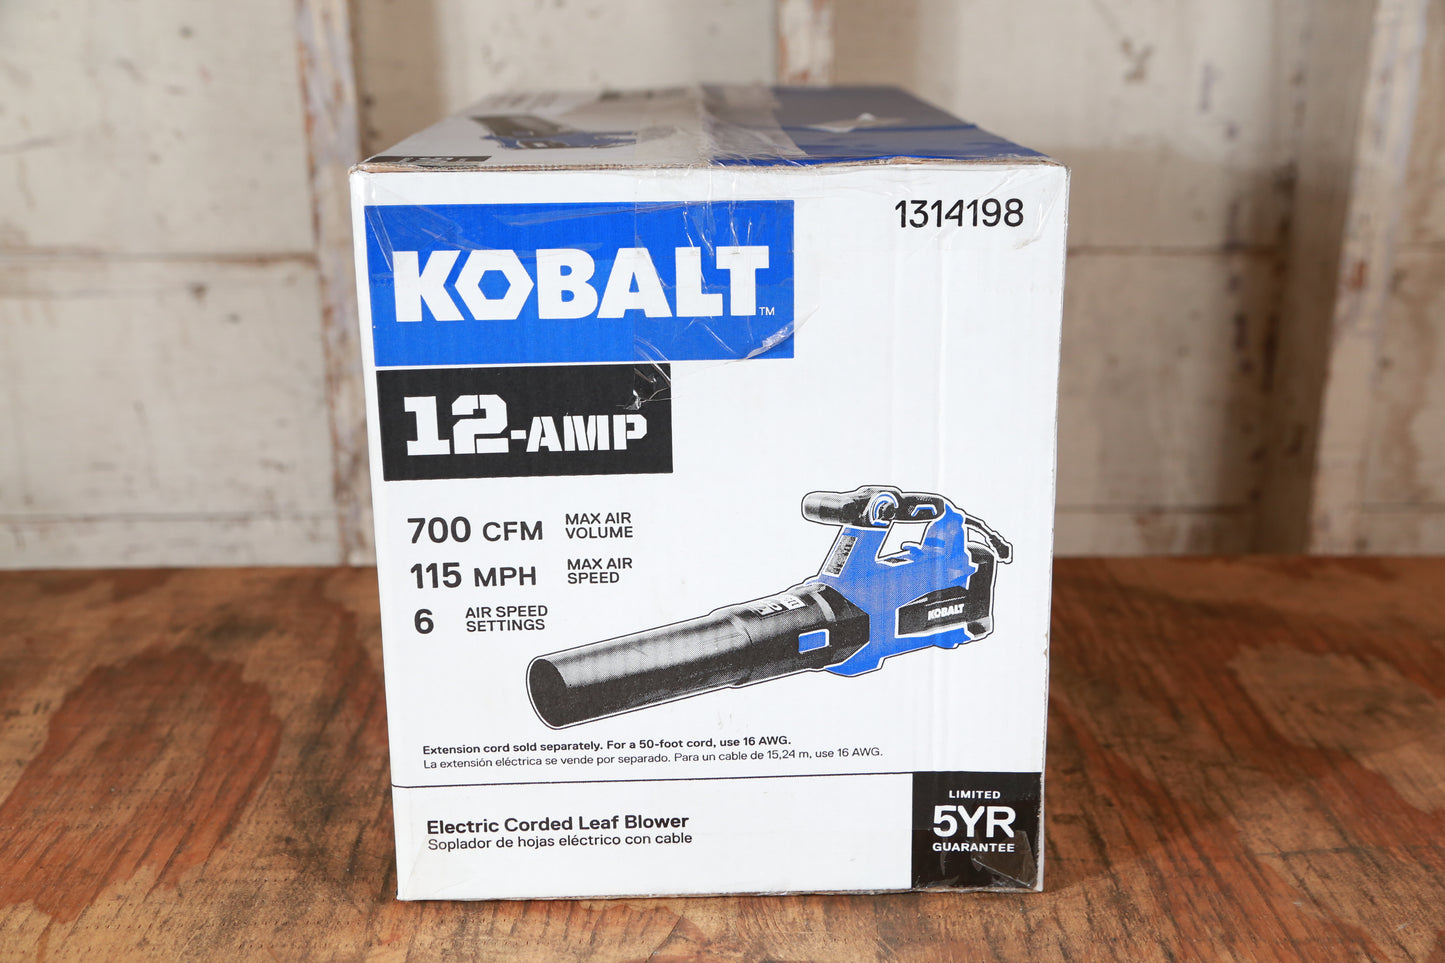 Kobalt 12-Amp 700-CFM 115-MPH Corded Electric Leaf Blower